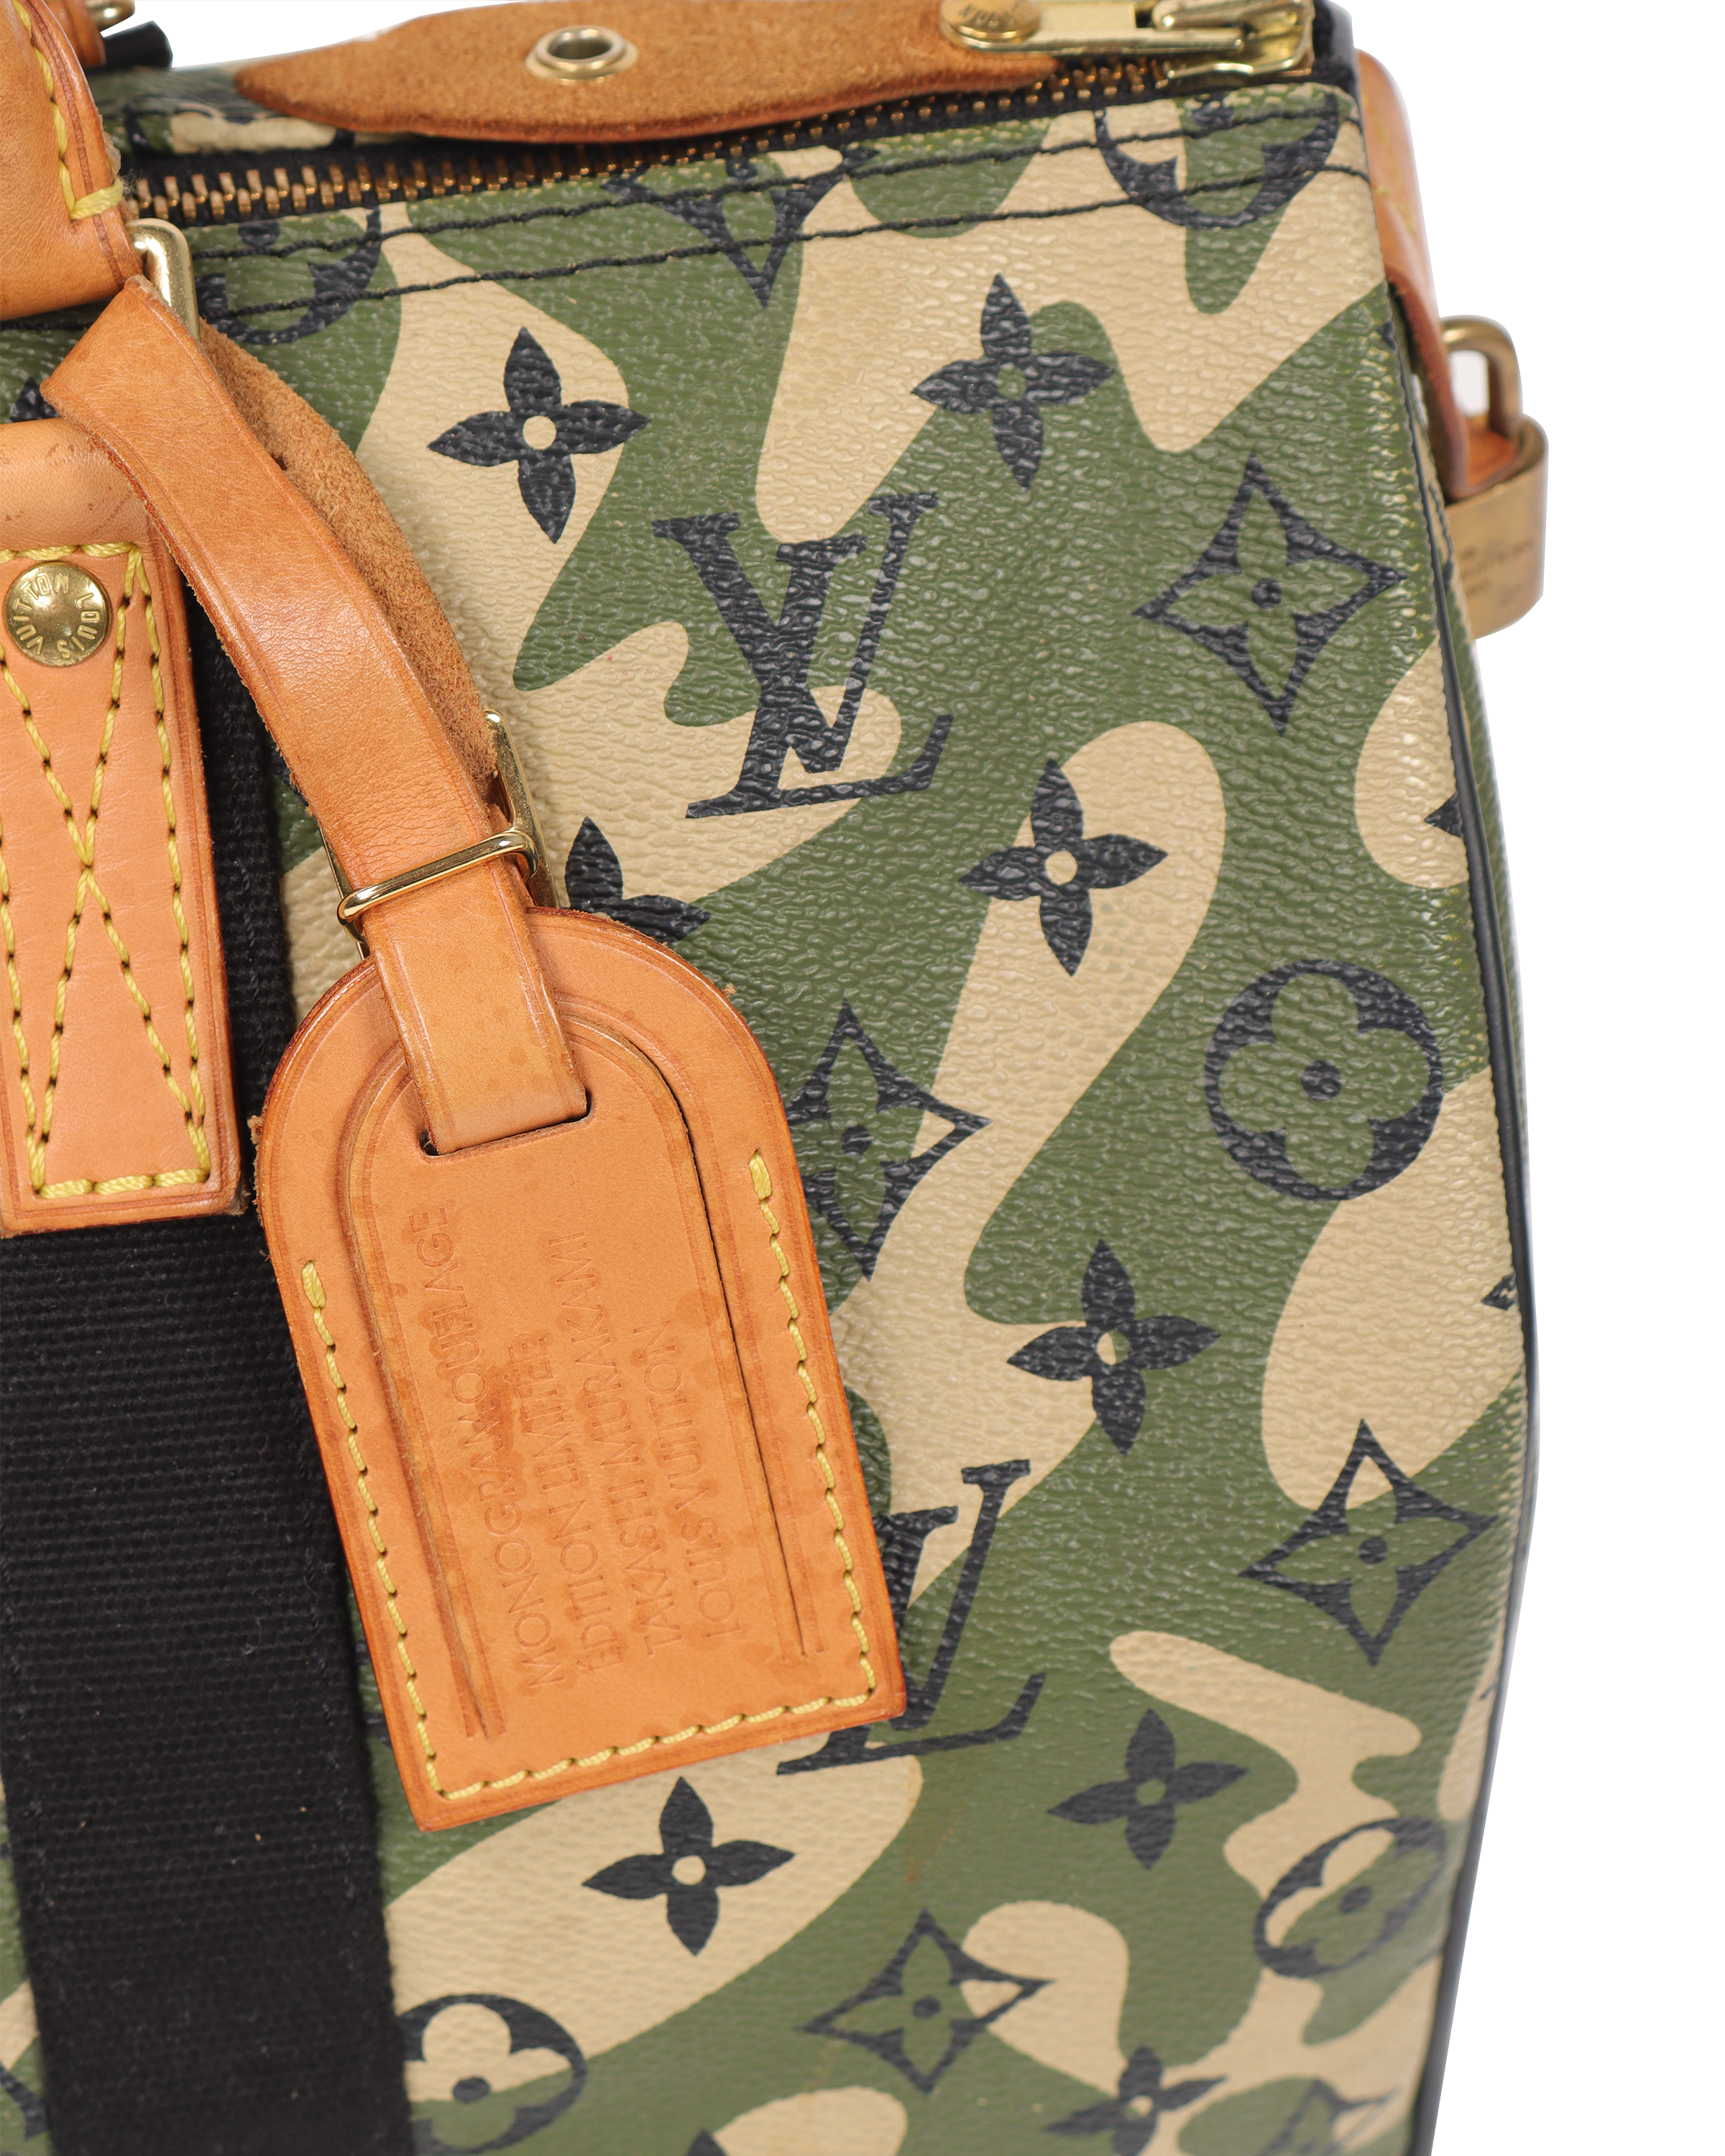 Louis Vuitton Speedy 35 Camouflage Monogramouflage Handbag in Box